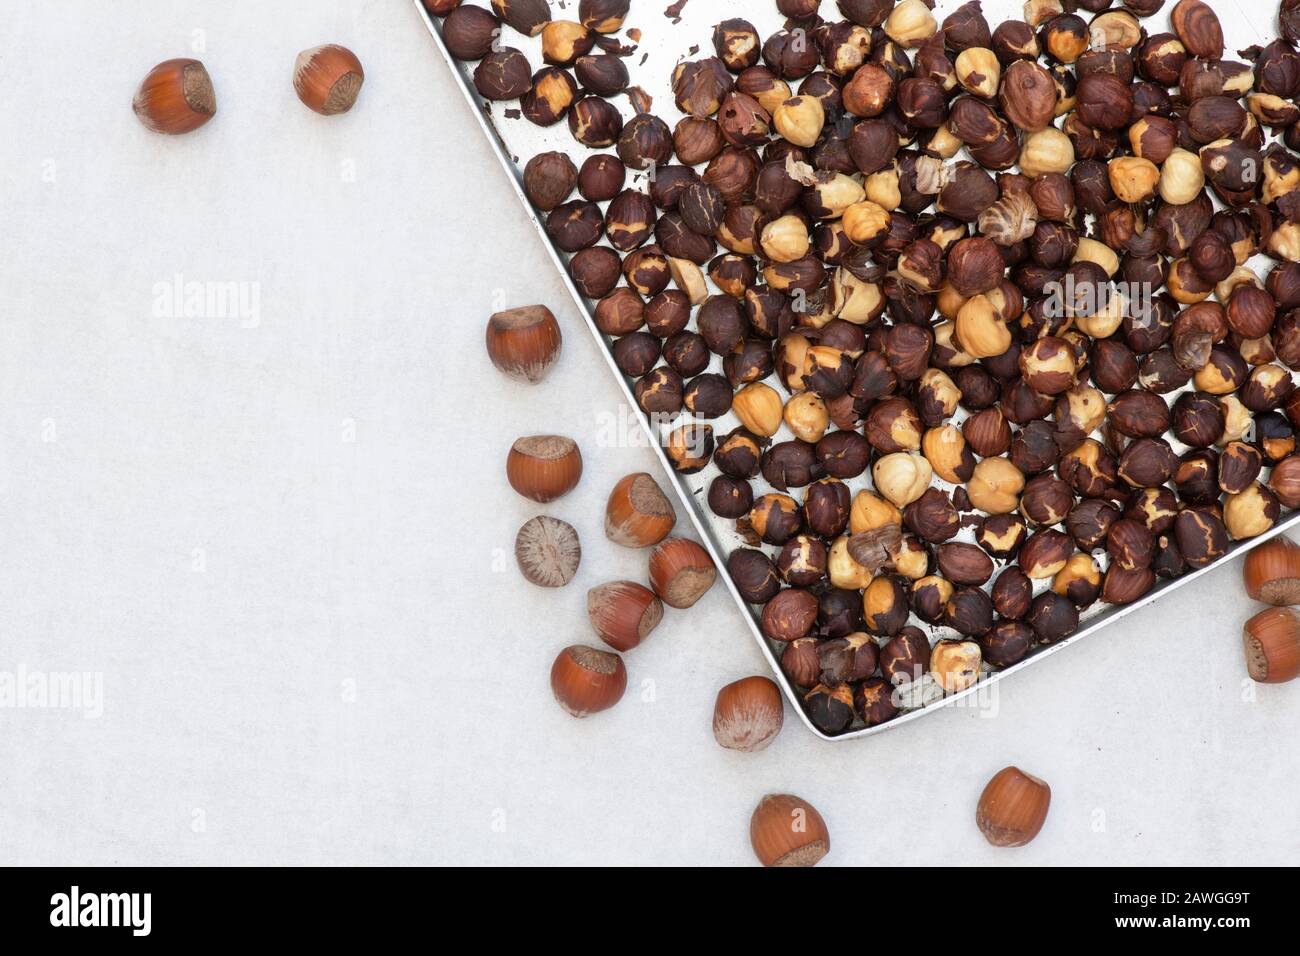 Corylus avellana. Roasted Hazelnuts on a baking tray for making homemade vegan hazelnut chocolate spread Stock Photo